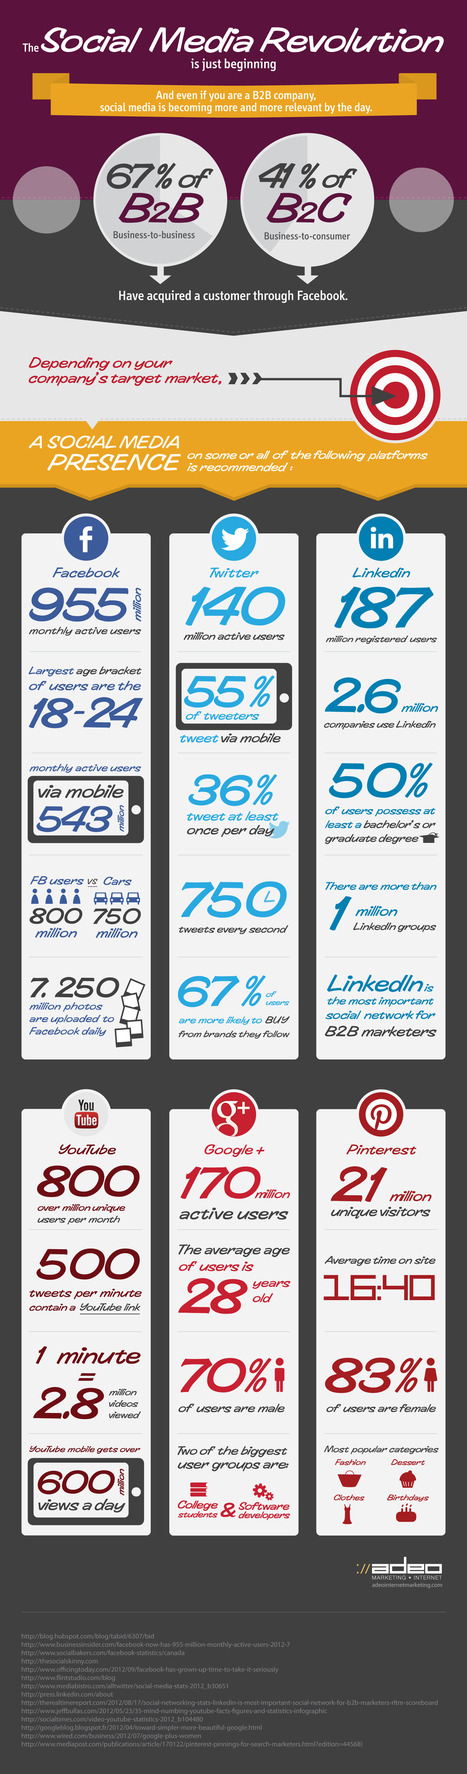 Social Media Revolution Revitalizing Modern Business (infographic) | MarketingHits | Scoop.it